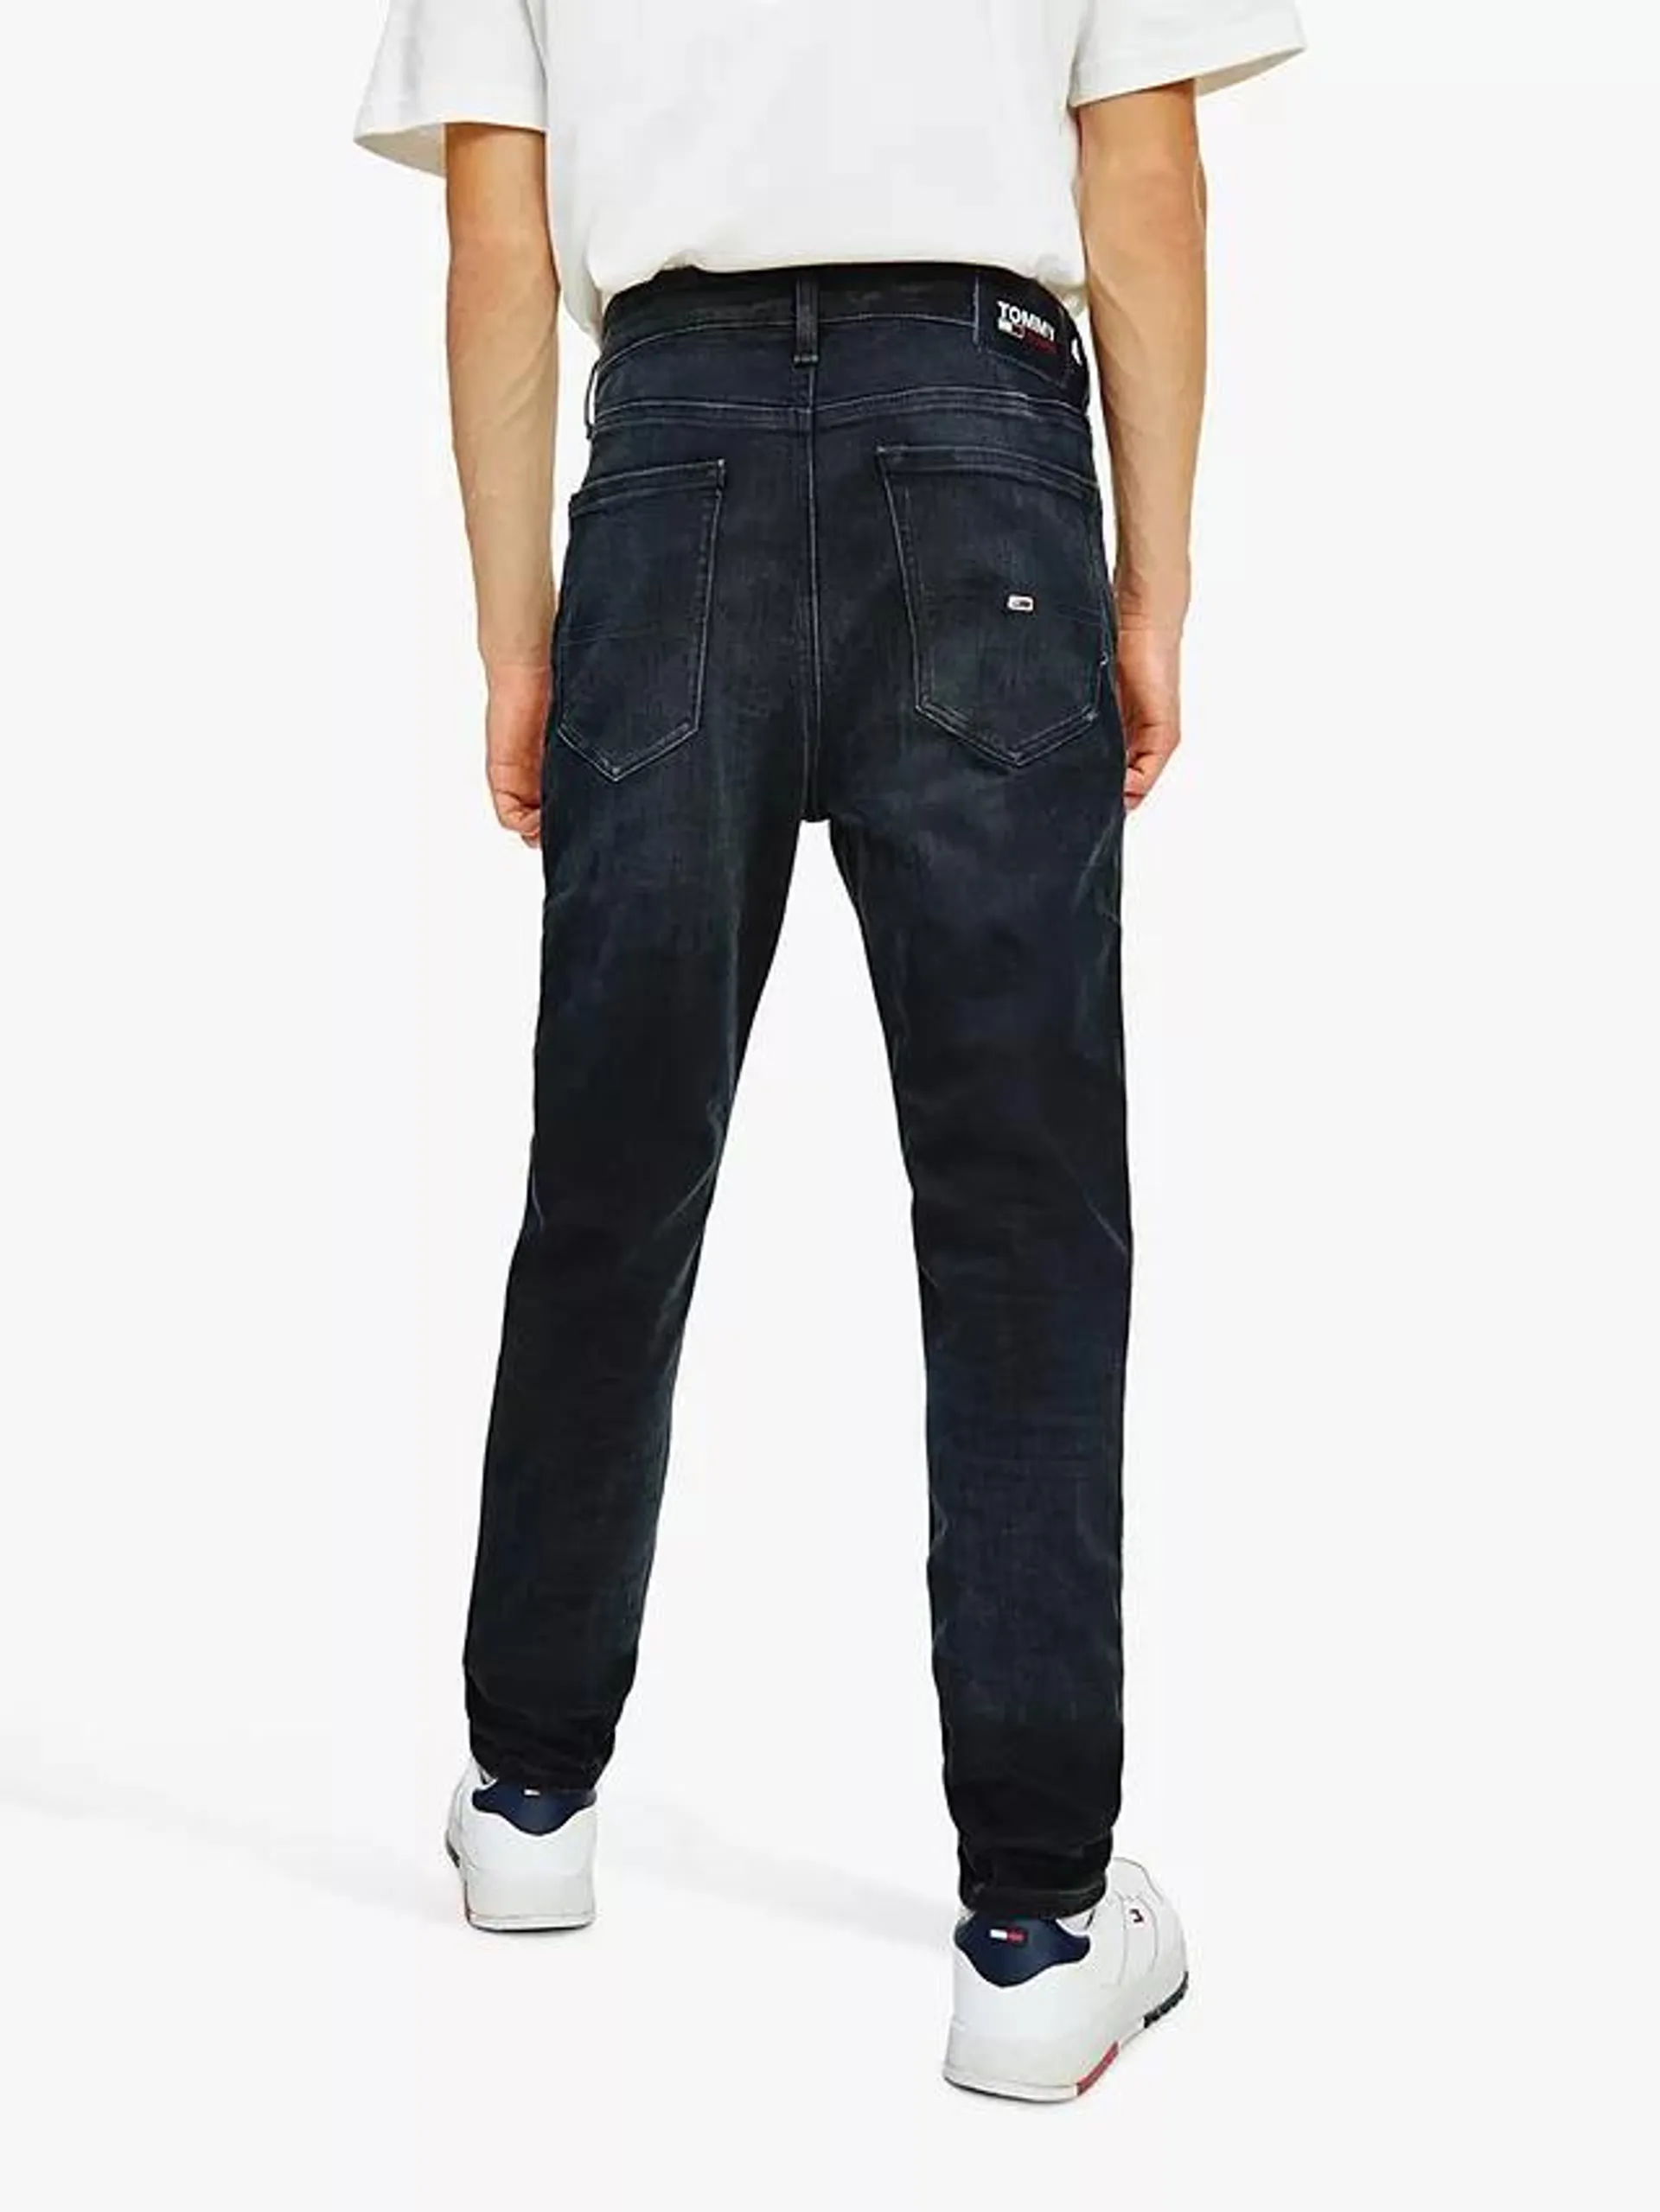 Hilfiger Denim Jacob Skinny Fit Jeans, Dynamic Black